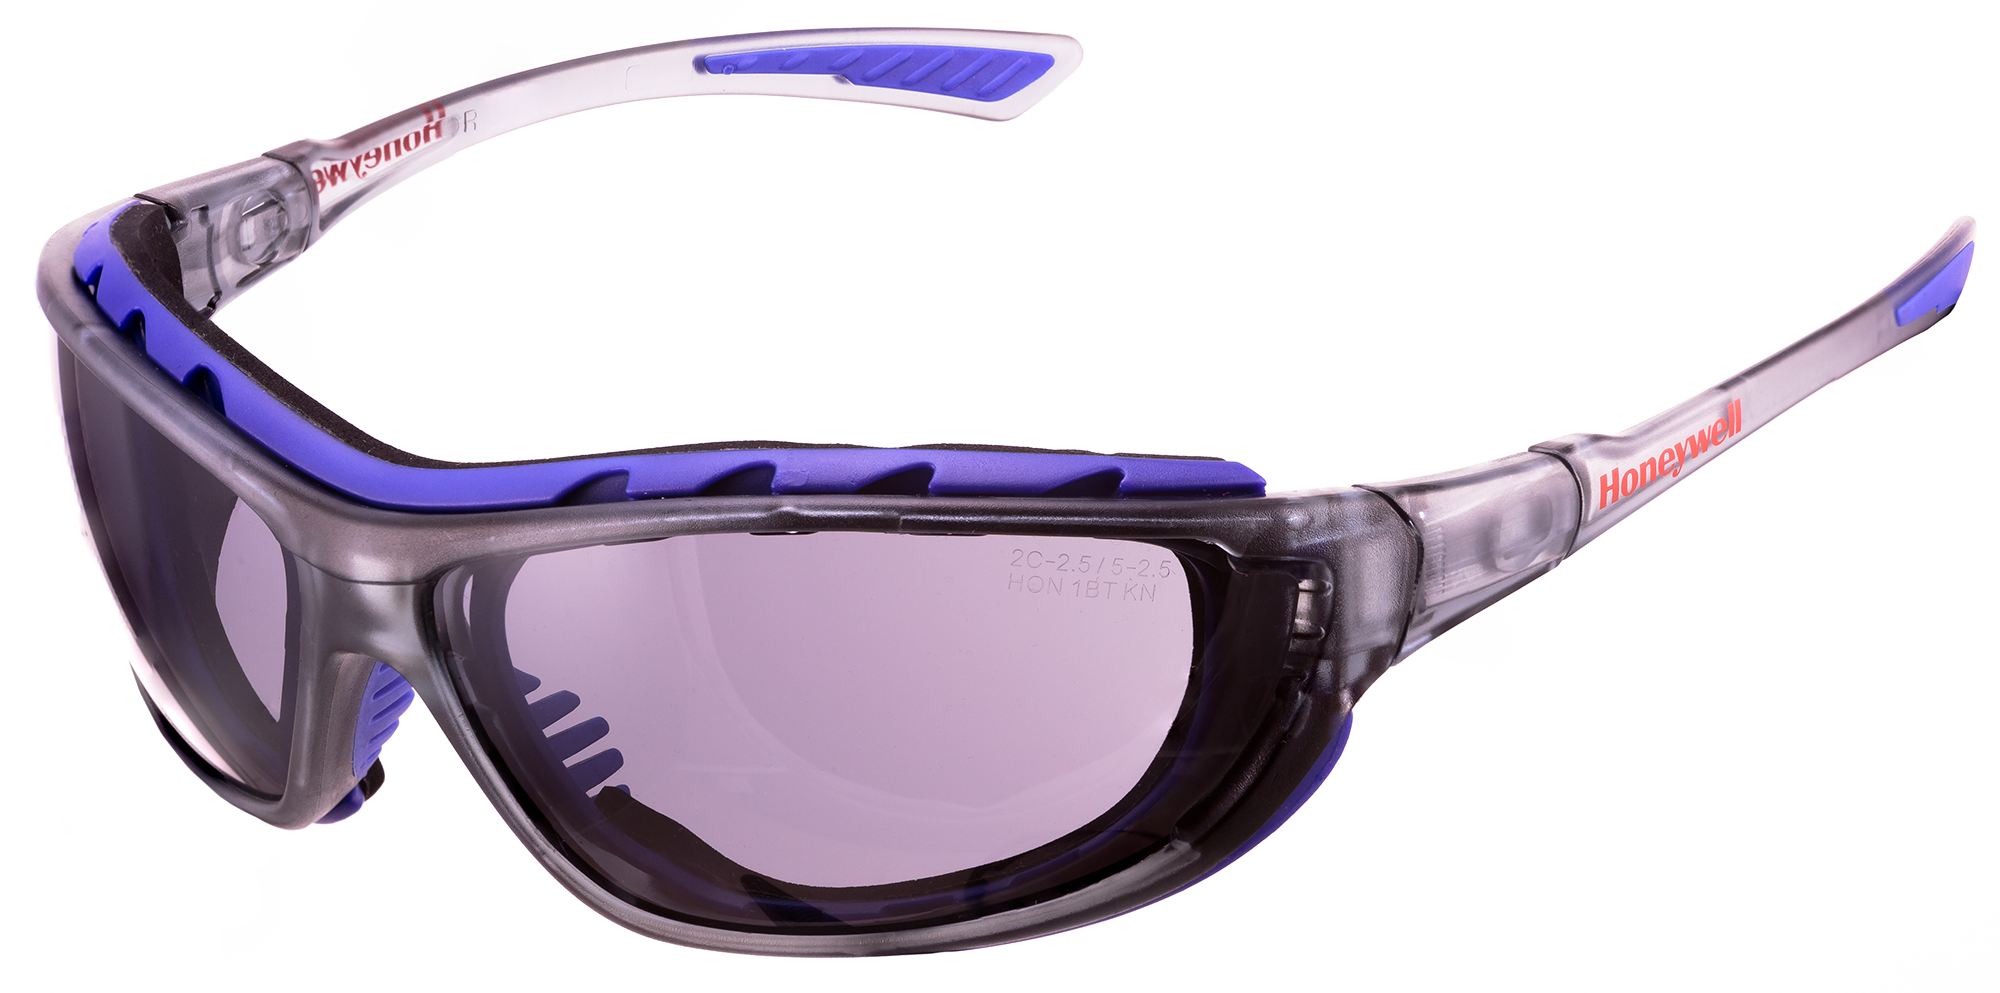 Honeywell Sp10002g Safety Glasses Goggles Smoky Lenses 1028643